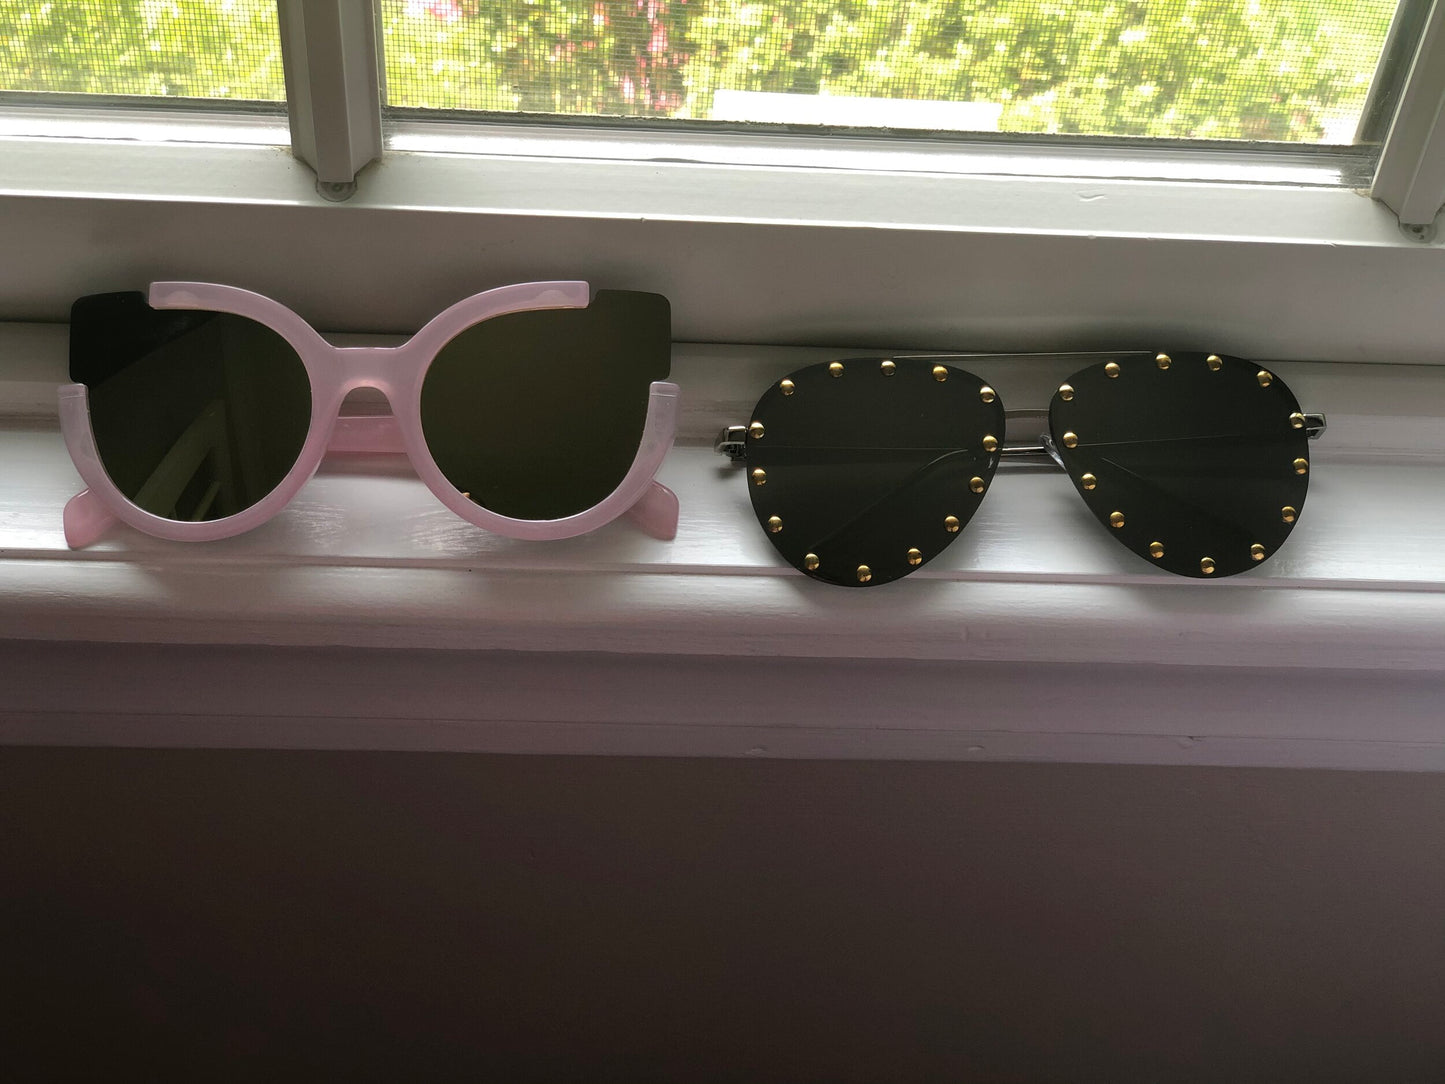 Sunglasses by Bari Lynn